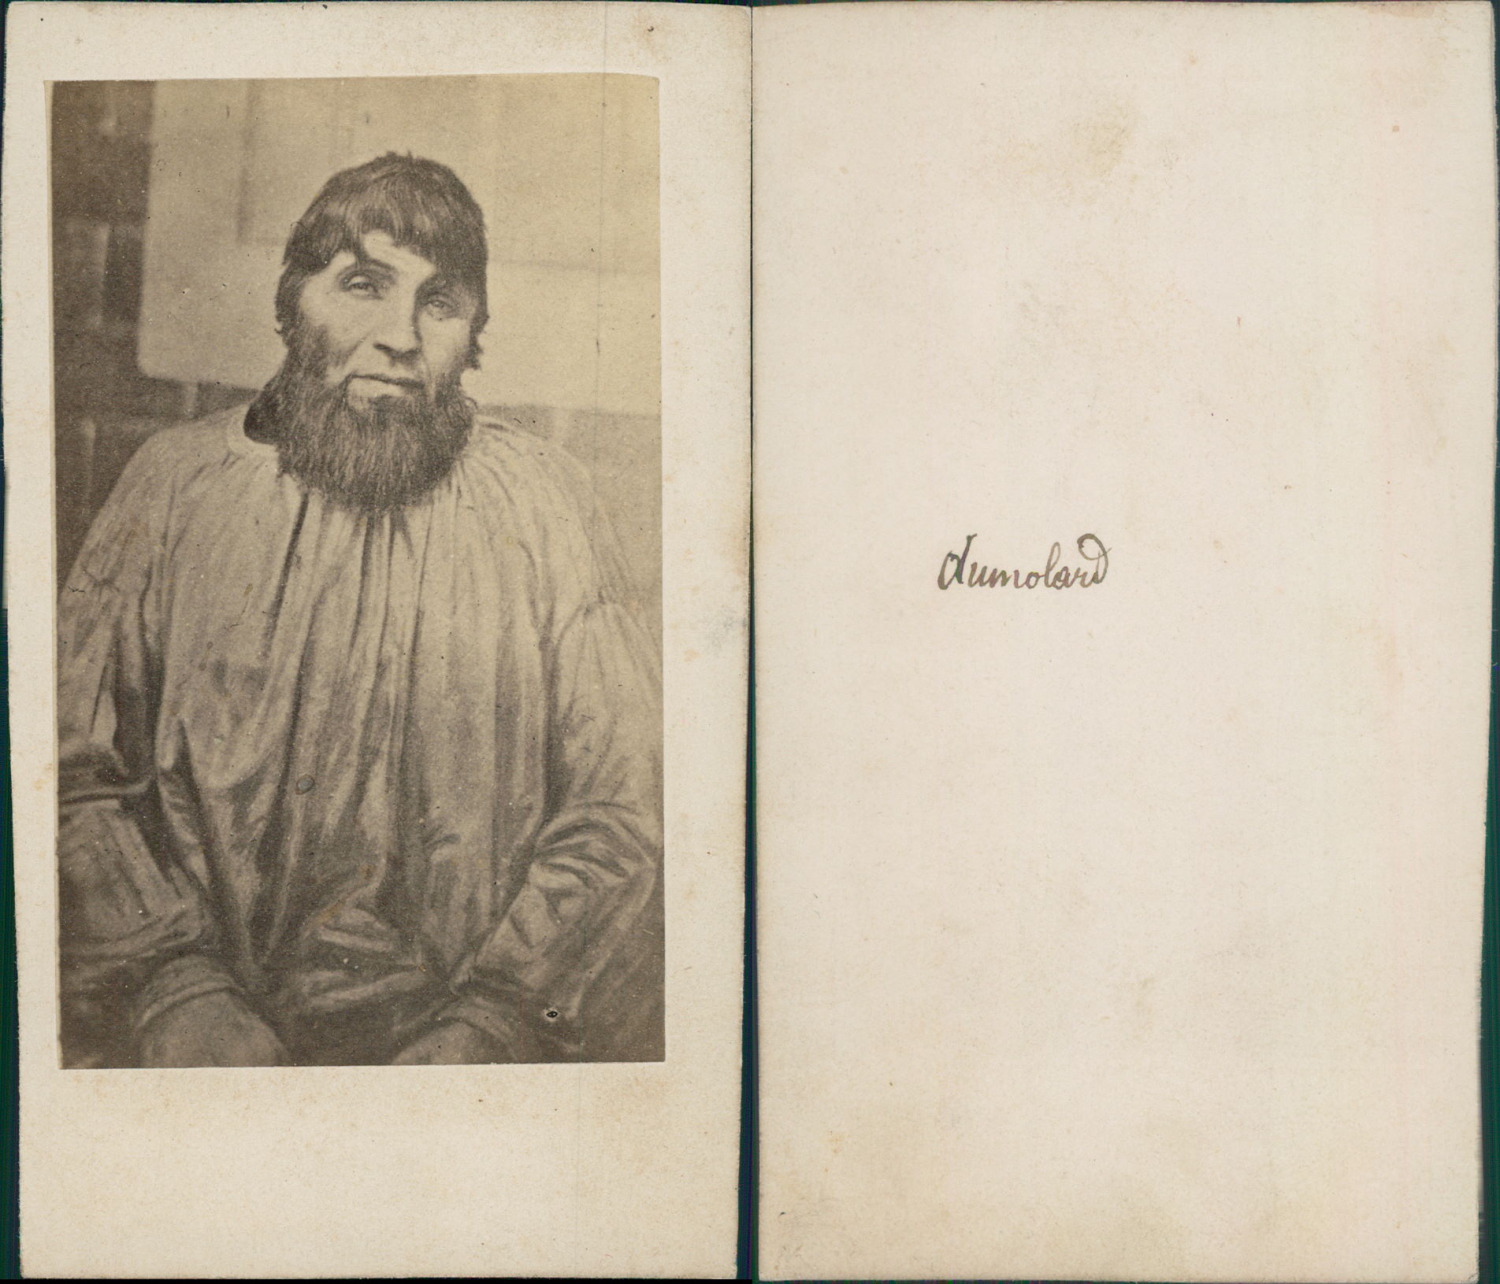 Martin Dumollard, Daily and Criminal, 1862 Vintage Albumen CDV. Martin Dum